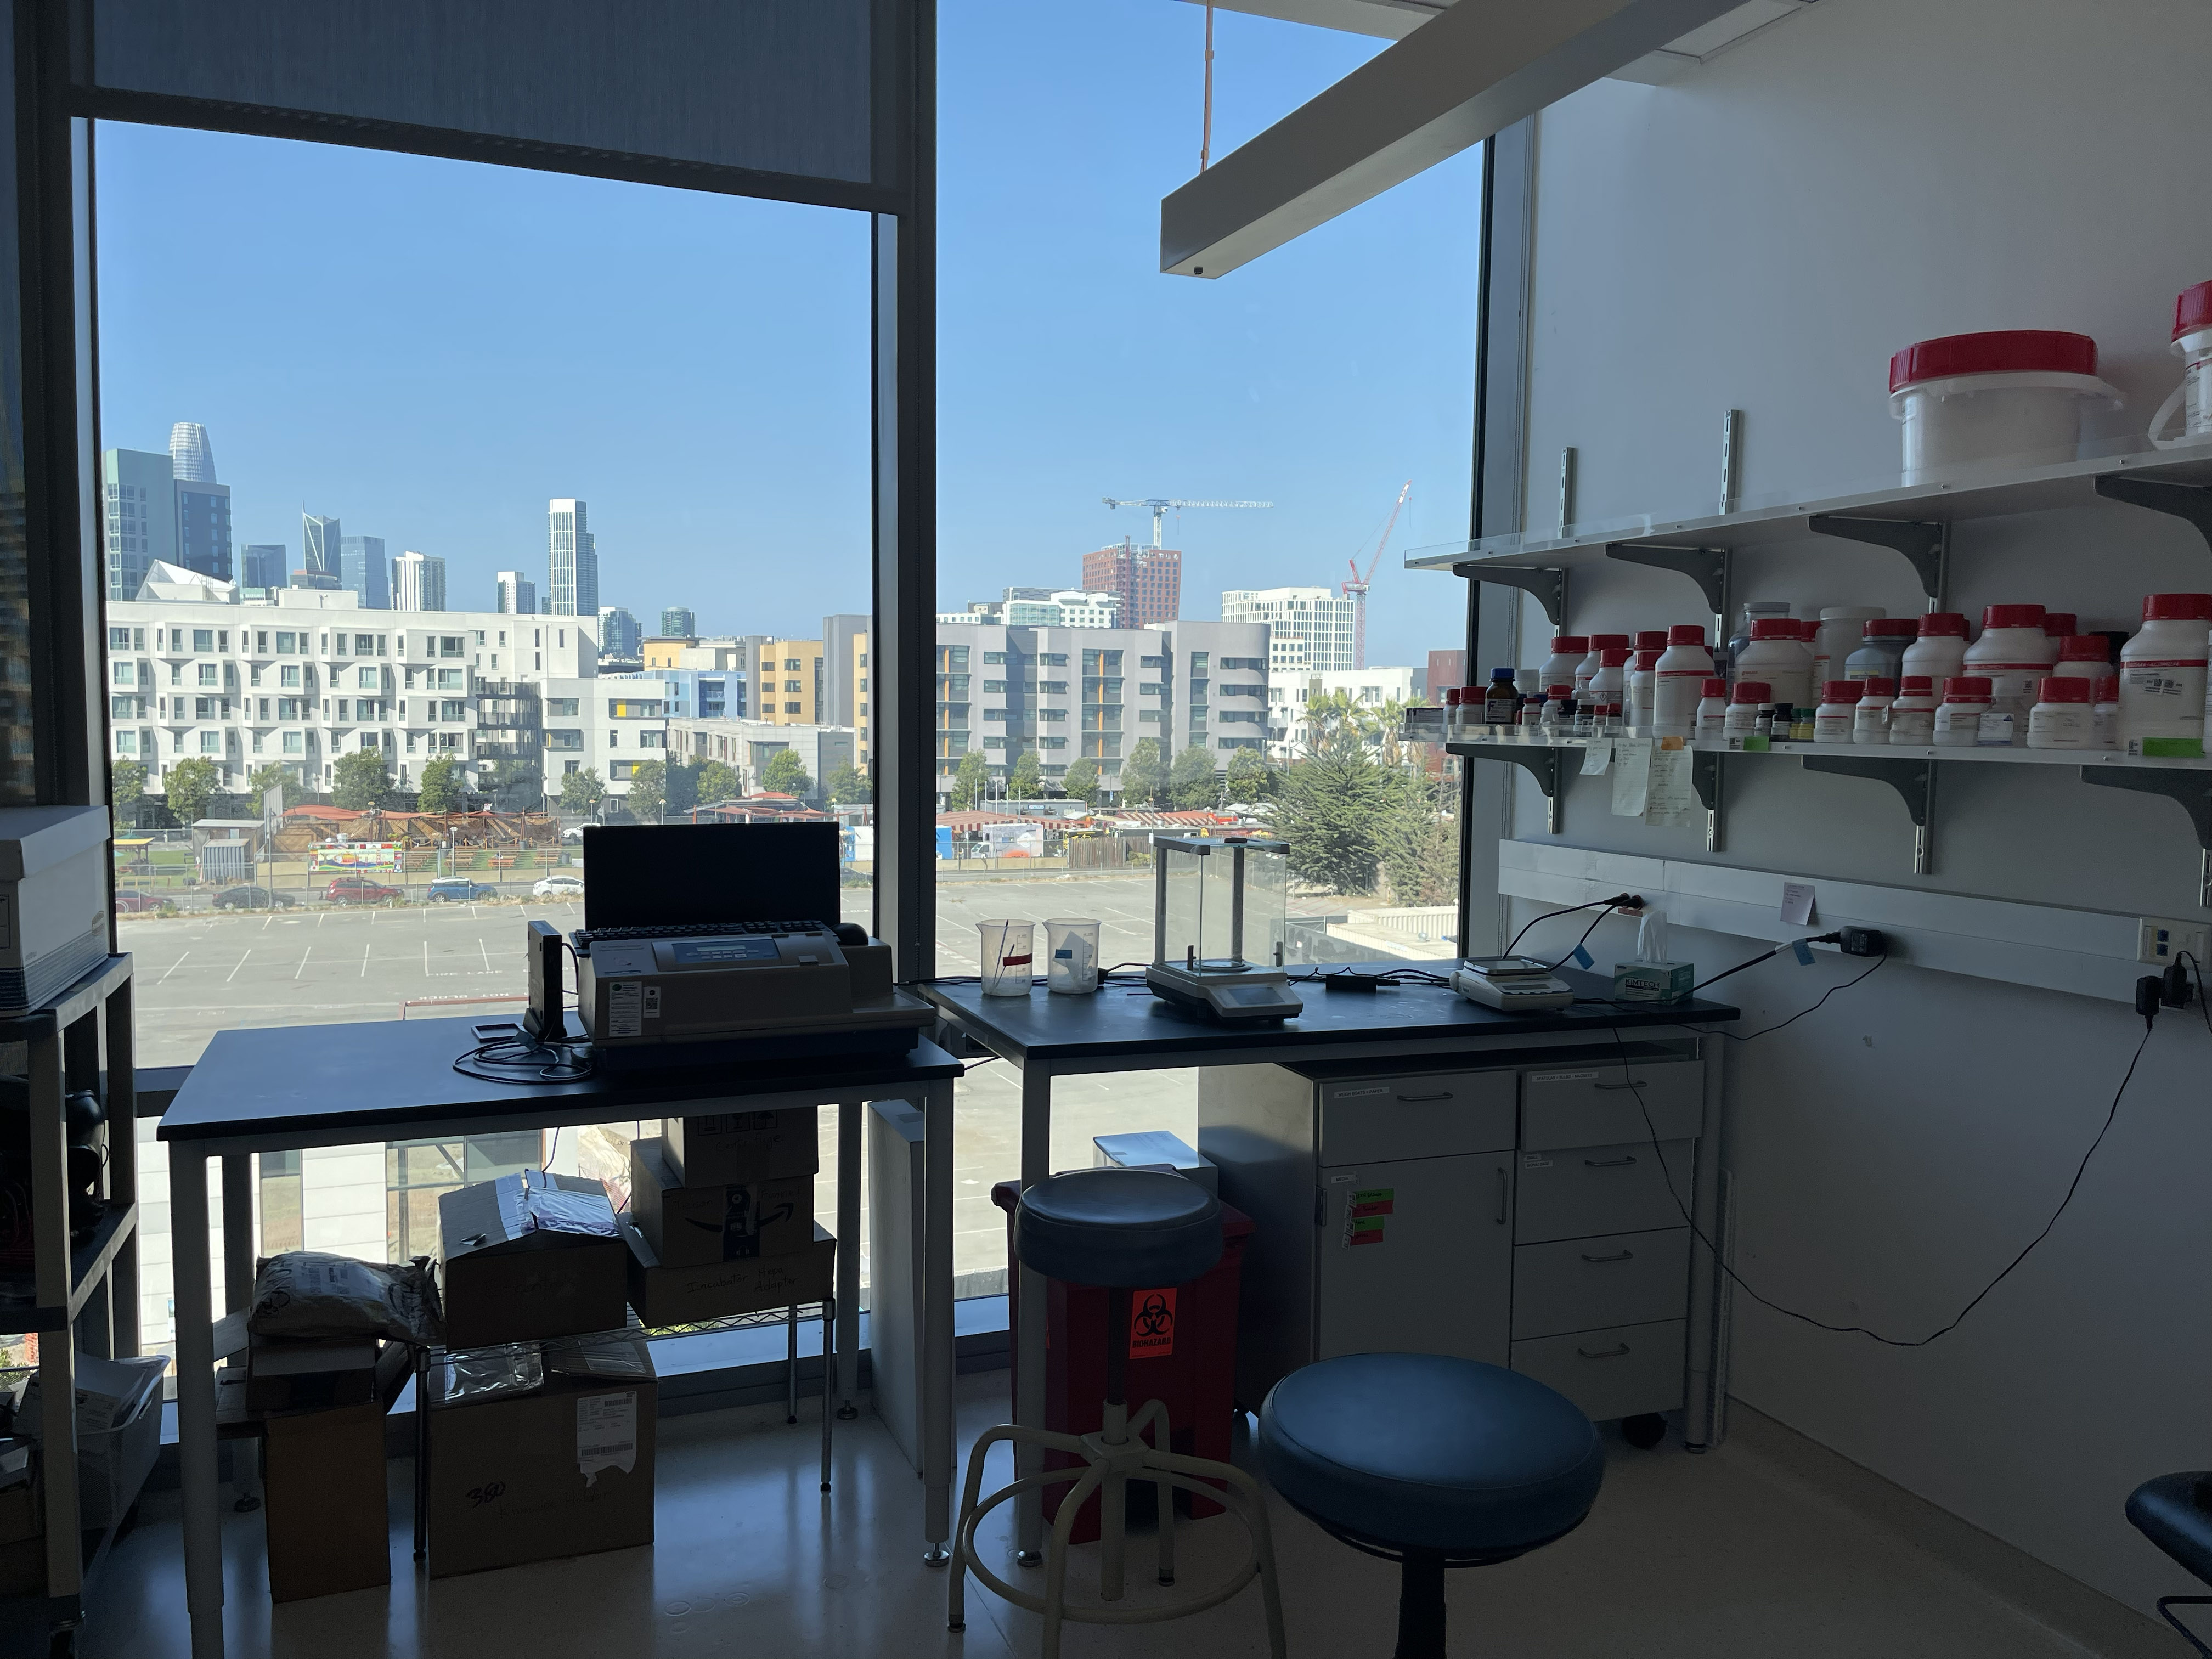 IND lab window overlooking San Francisco